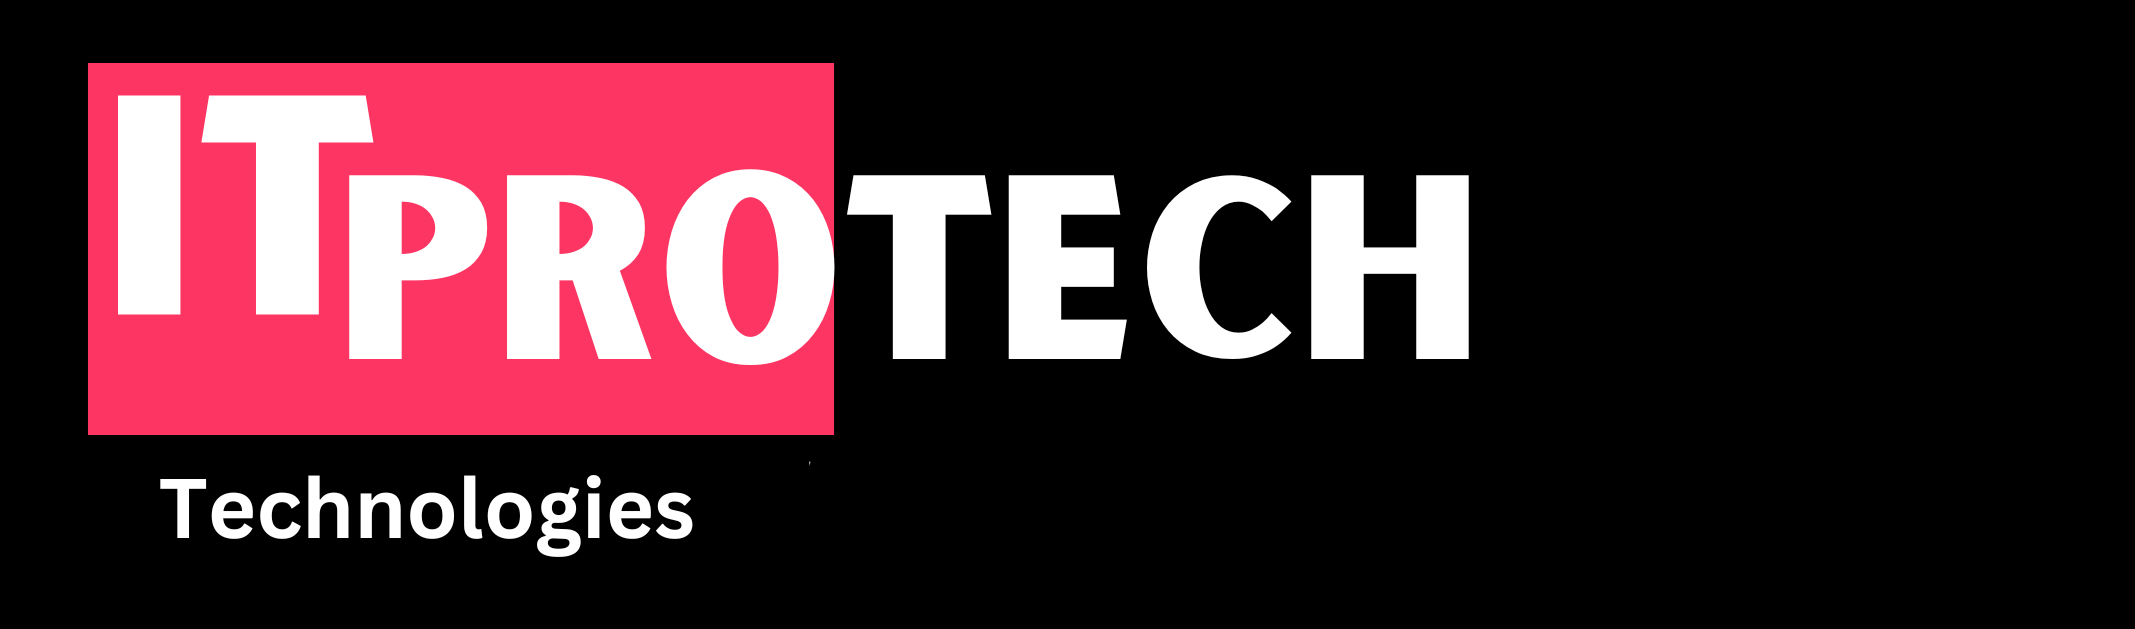 ITprotech Logo